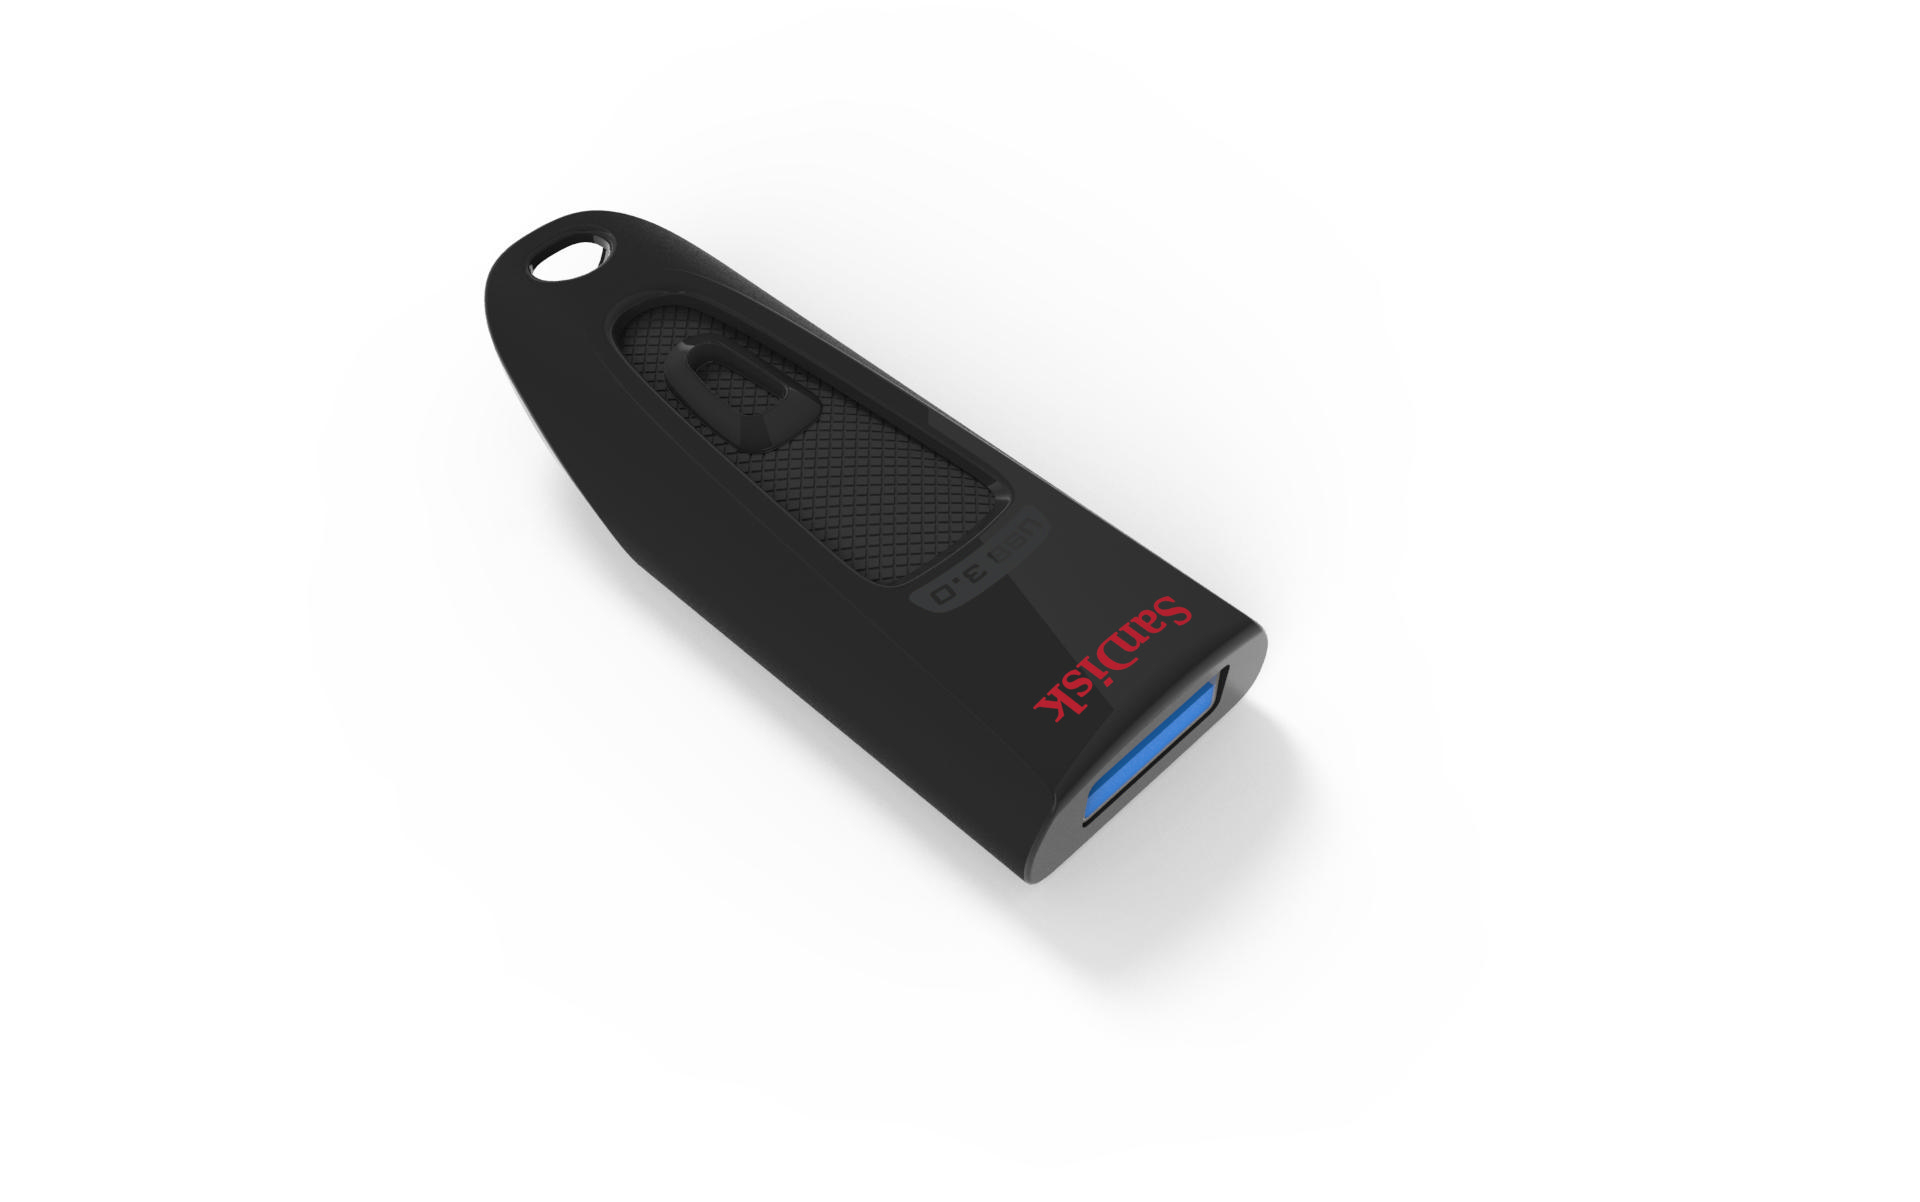 MB/s, Ultra® GB, 512 USB-Stick, SANDISK 130 Schwarz